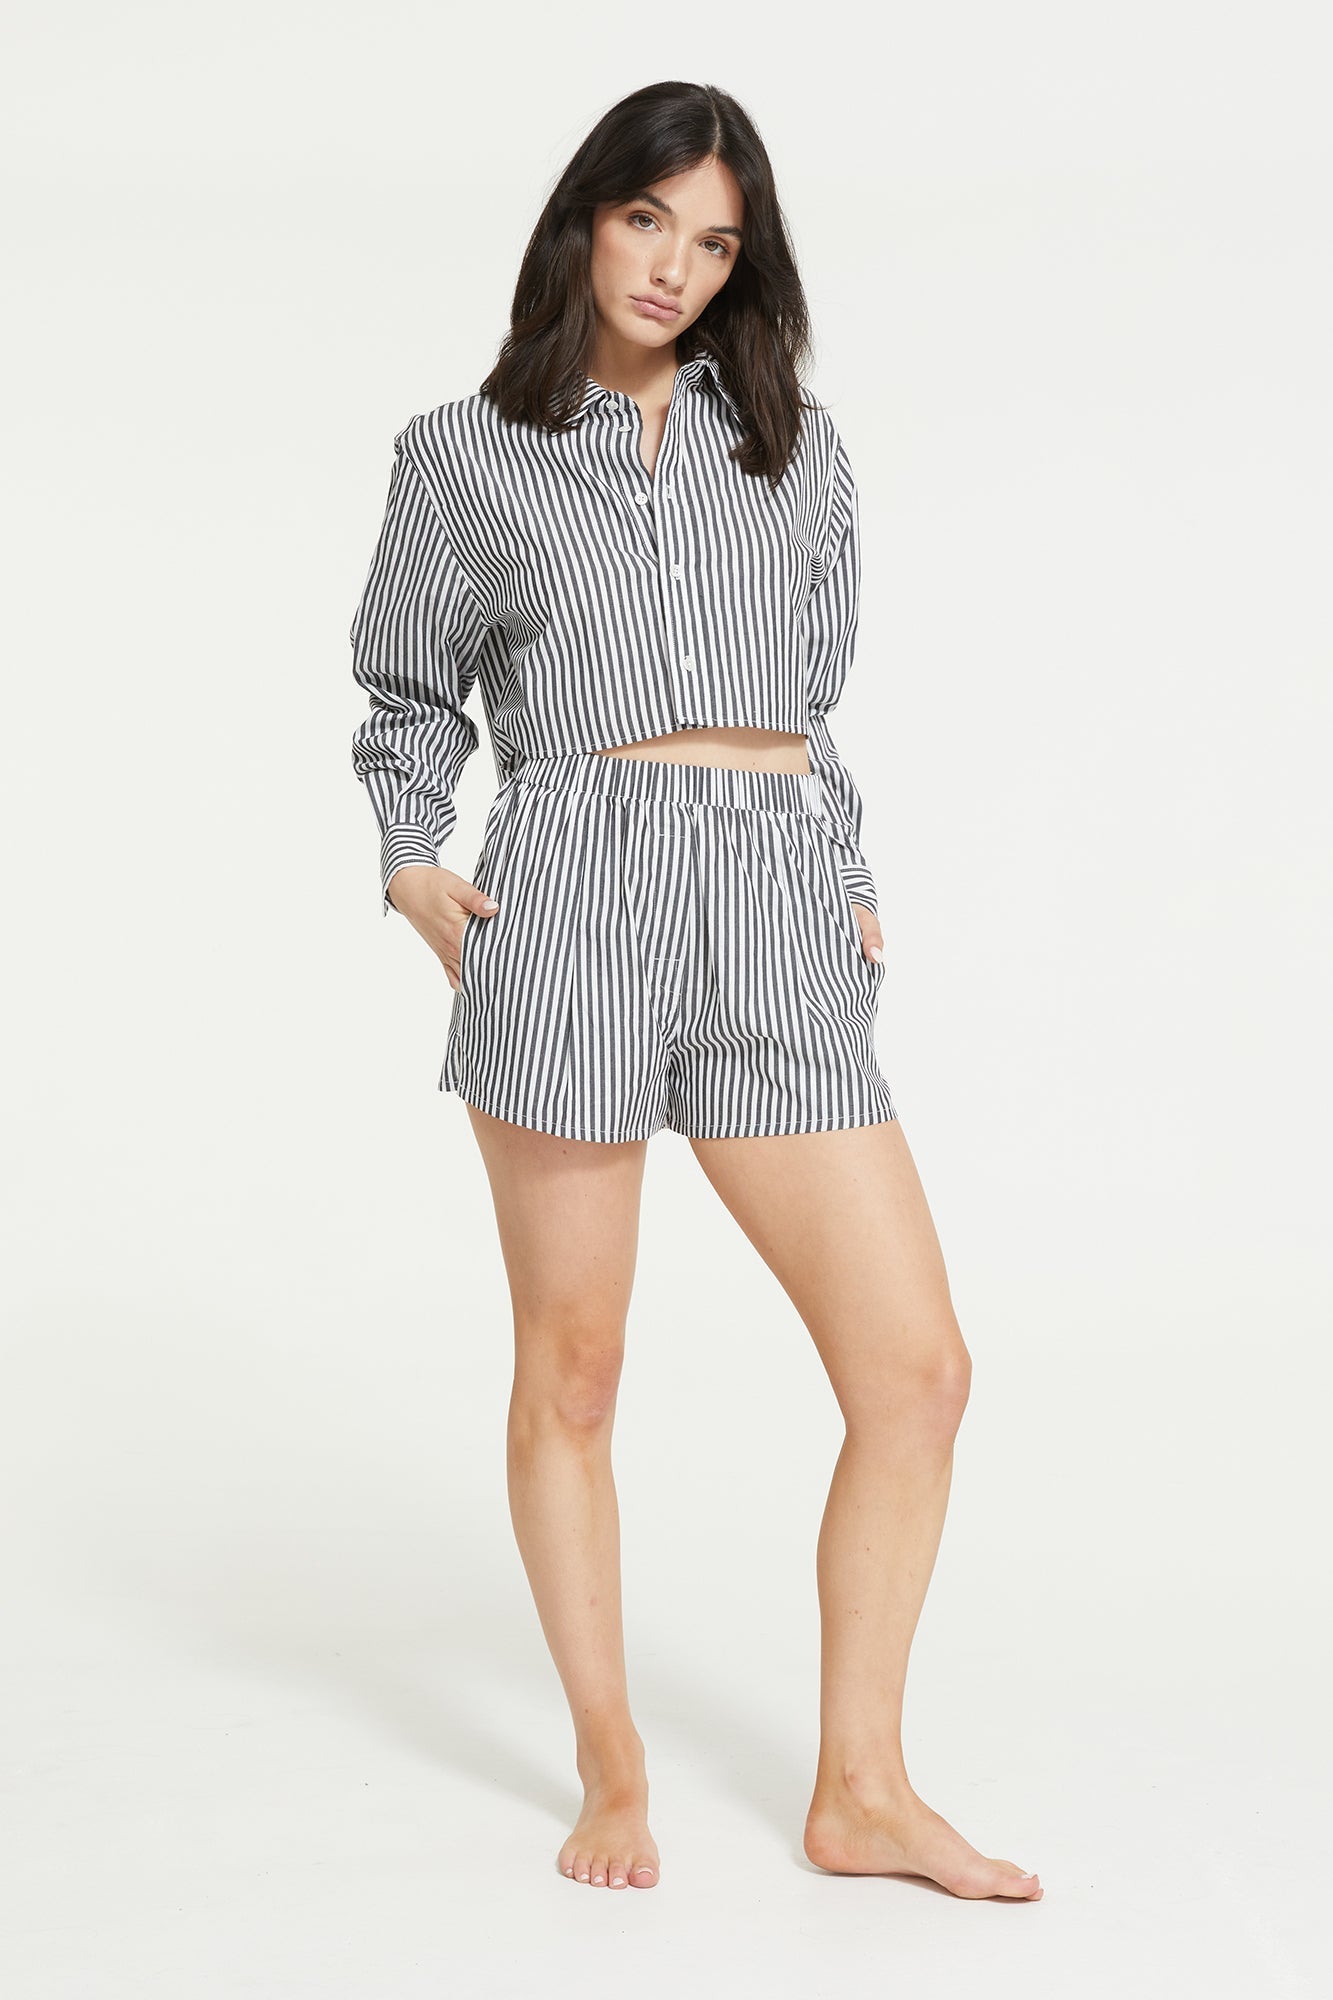 The Franca Stripe Crop Shirt By GINIA In Black & White Stripe